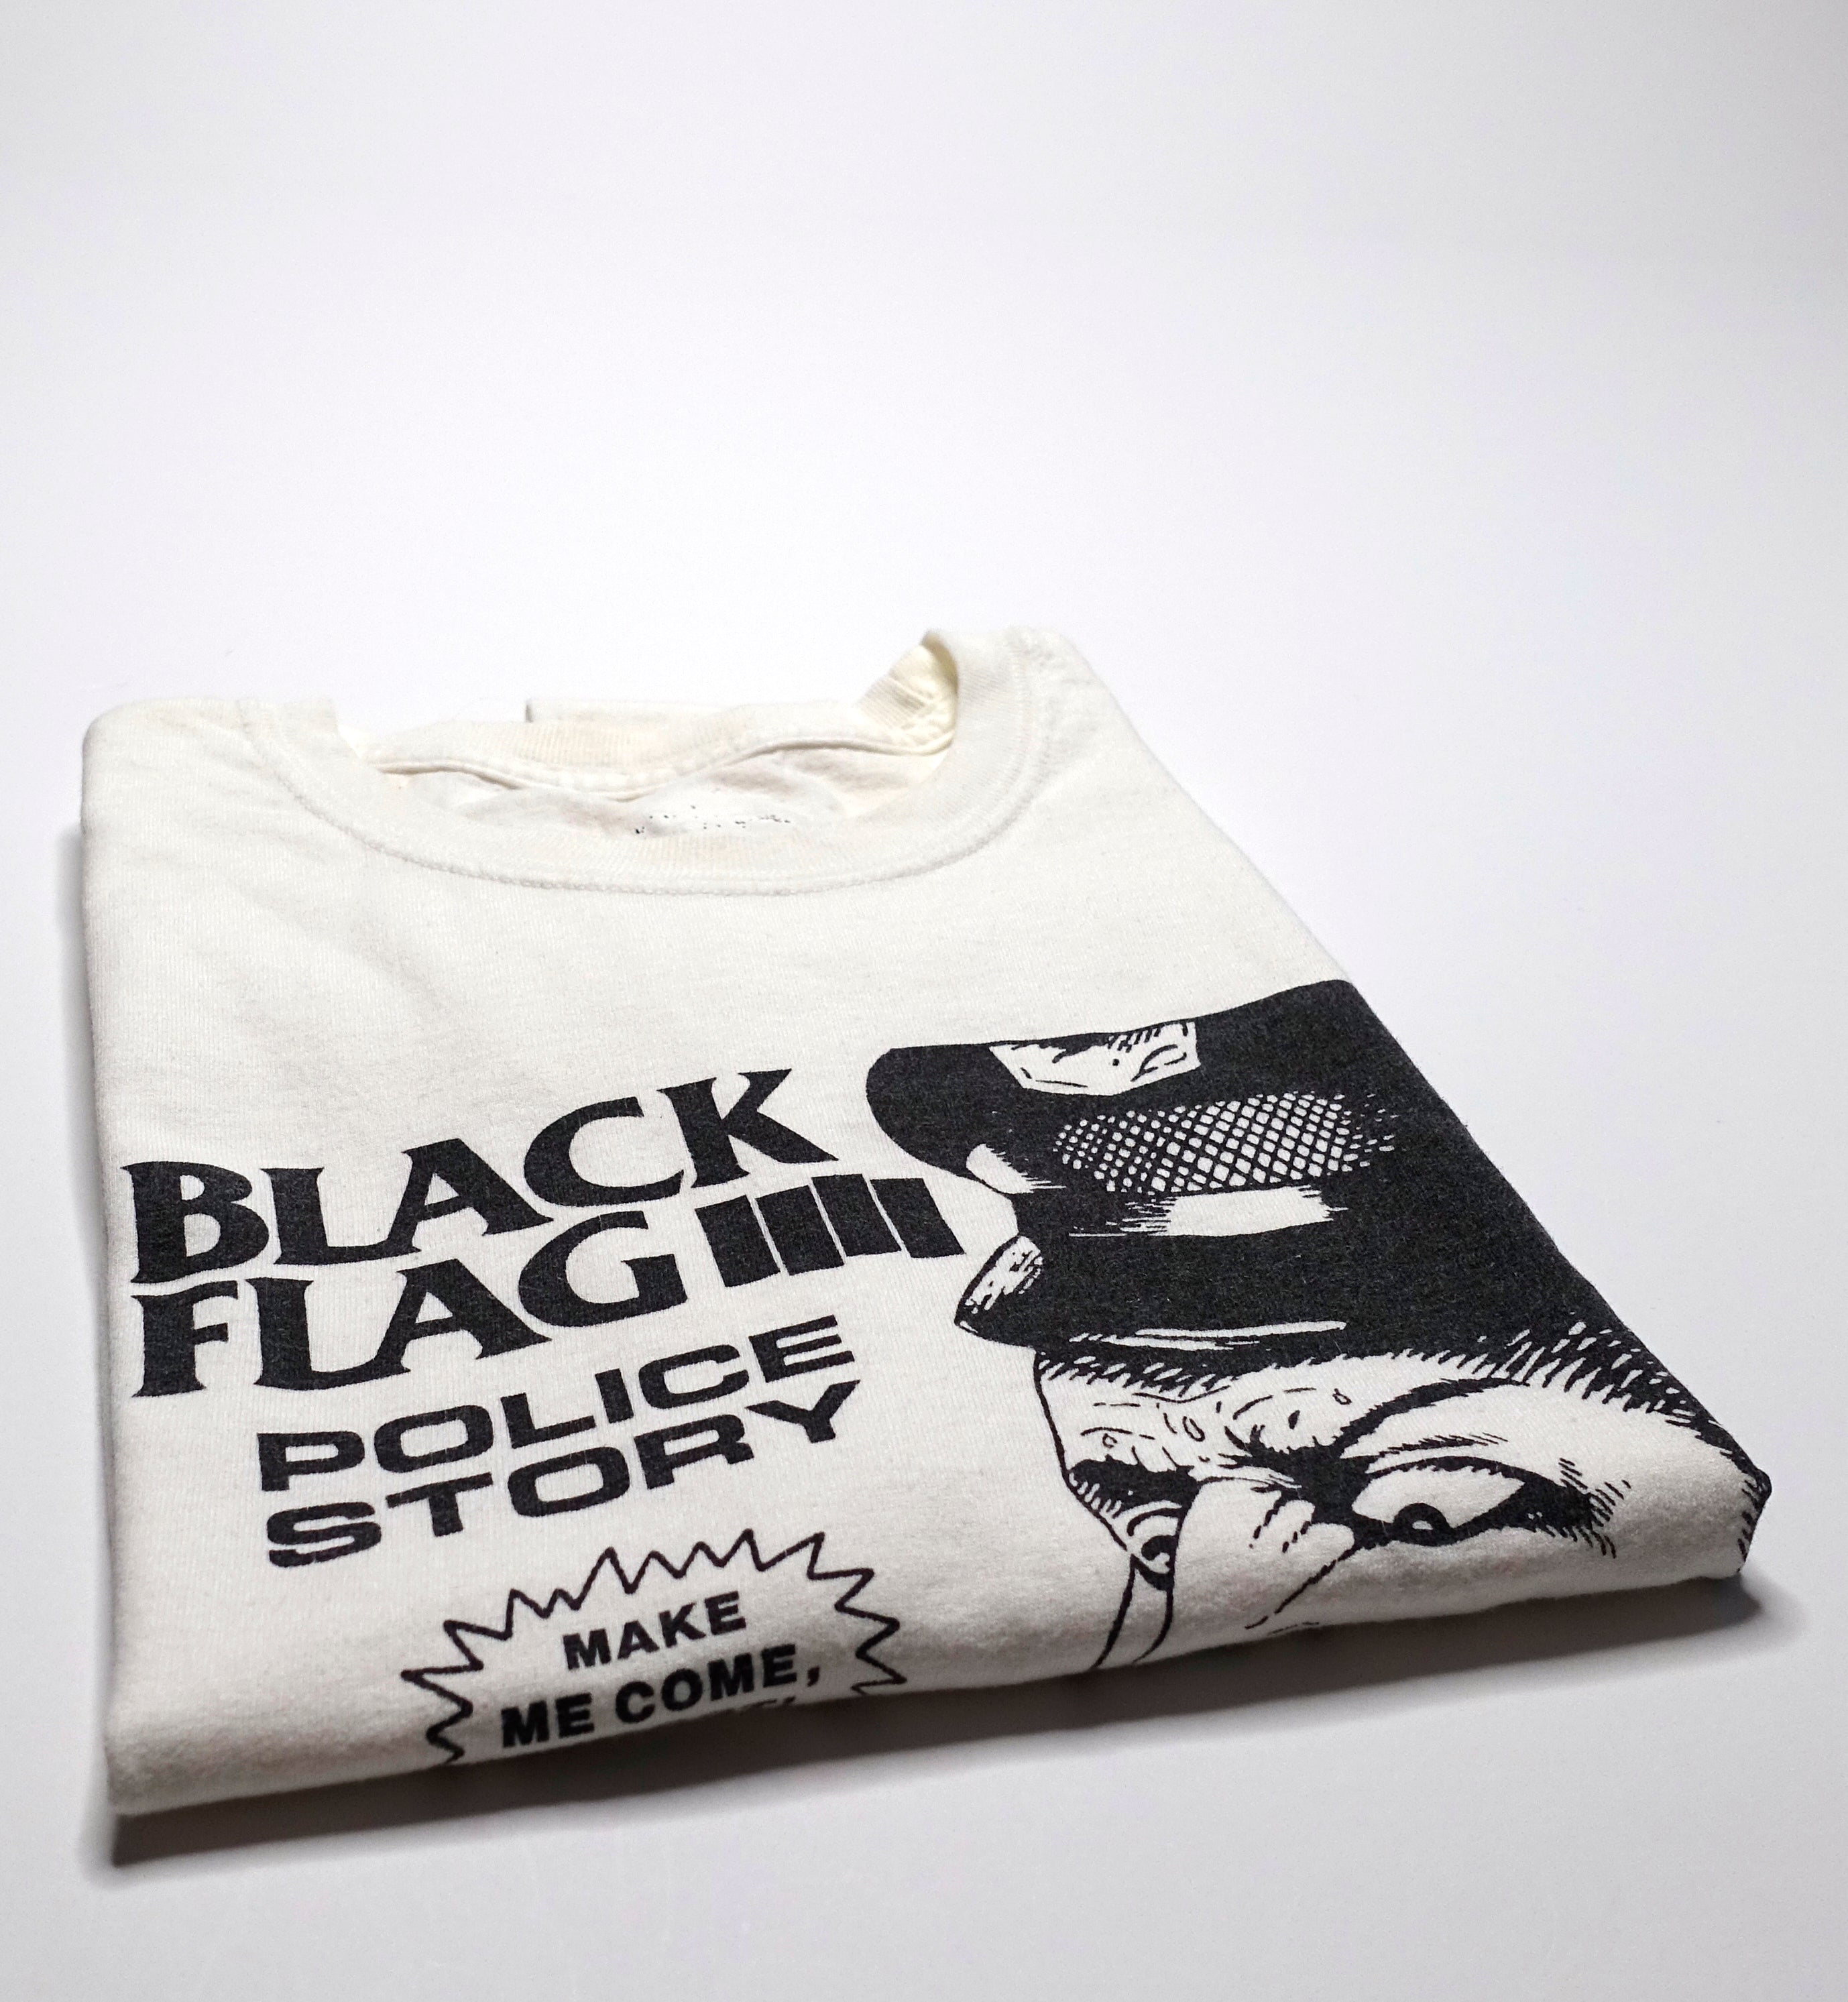 Black Flag - Police Story 00's SST Mailorder Shirt Size Large